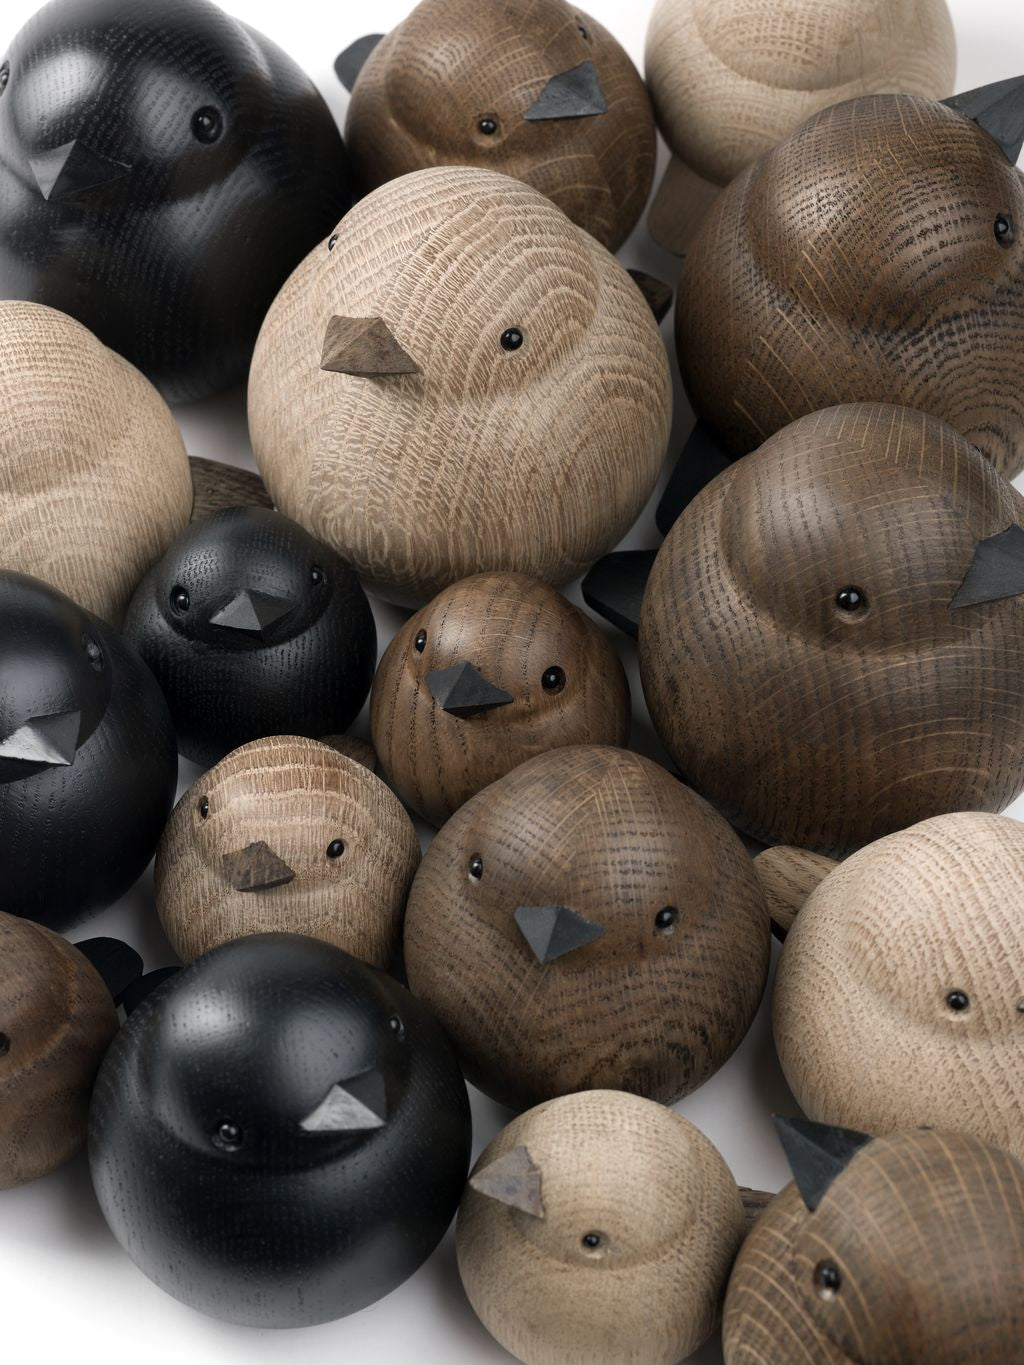 Design novoform Mama Sparrow Figura decorativa, quercia macchiata nera